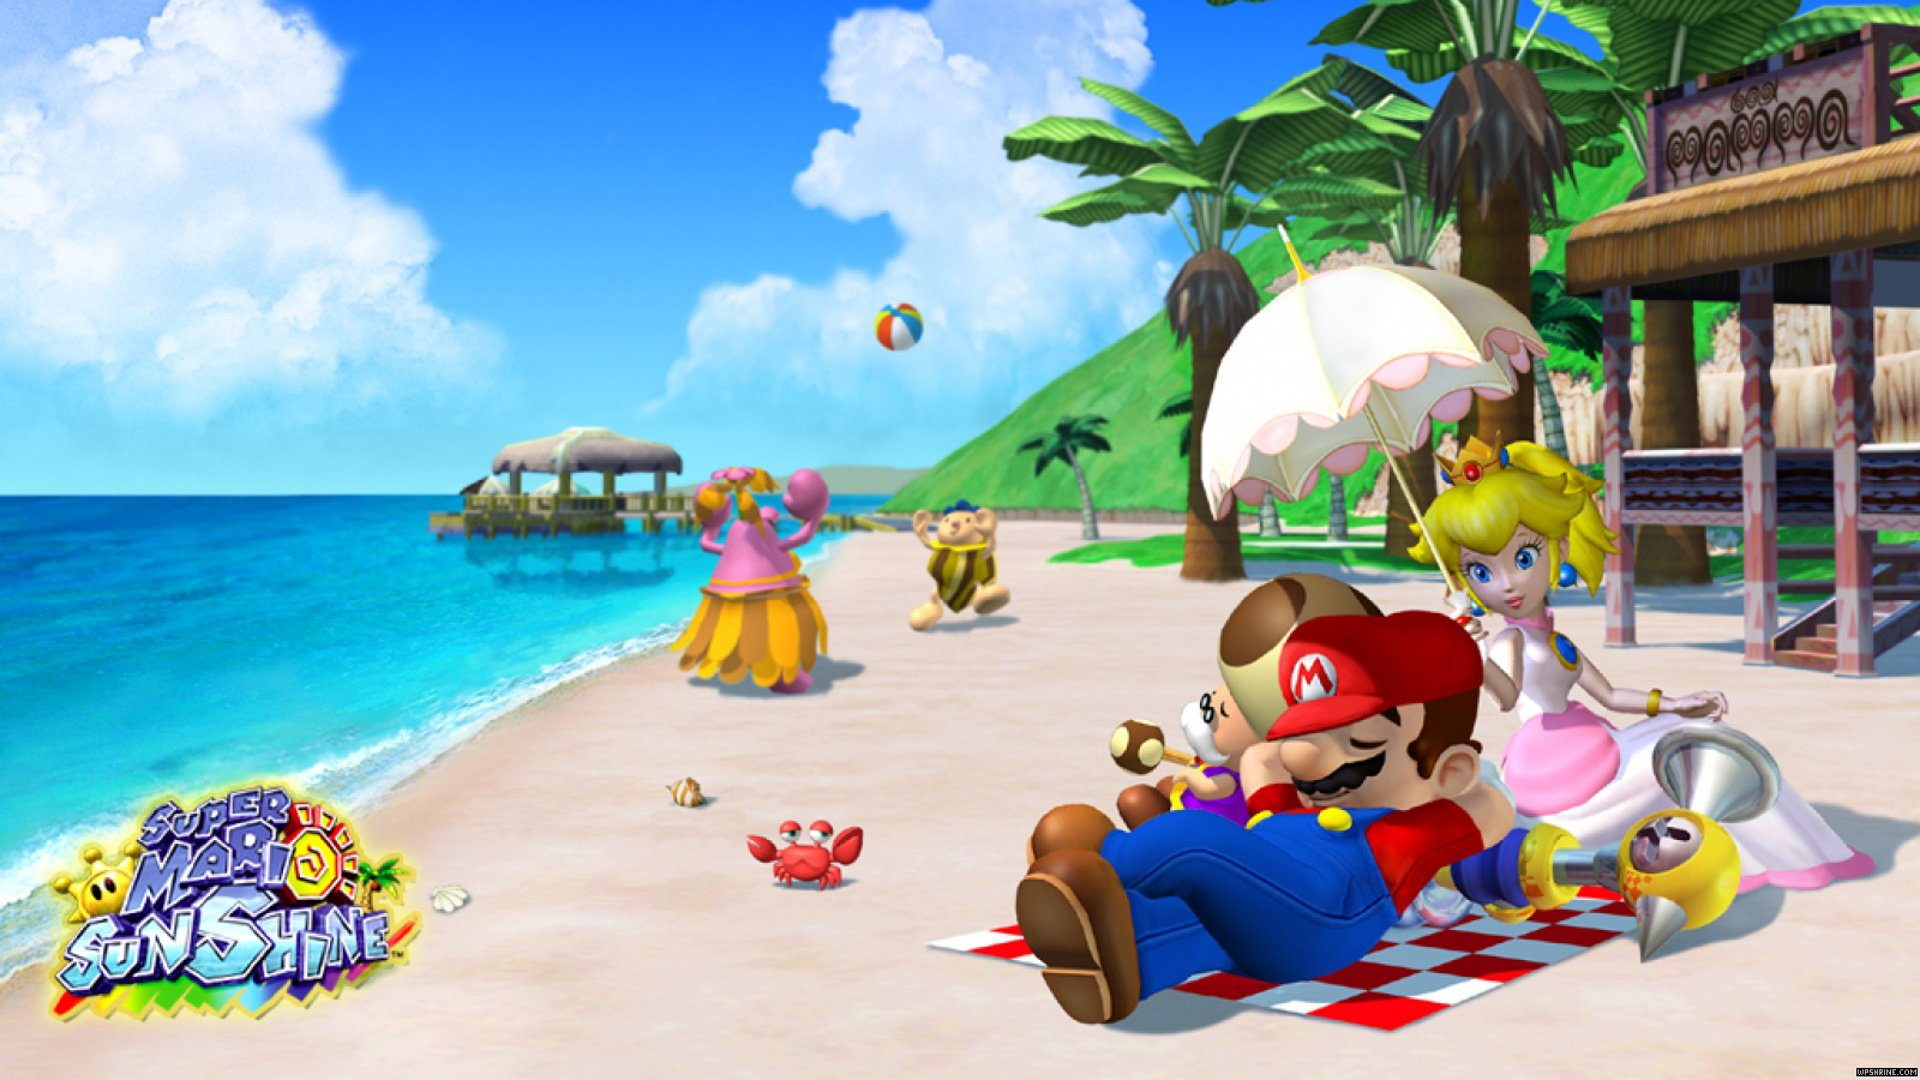 Super Mario Sunshine HD Wallpaper Background Image